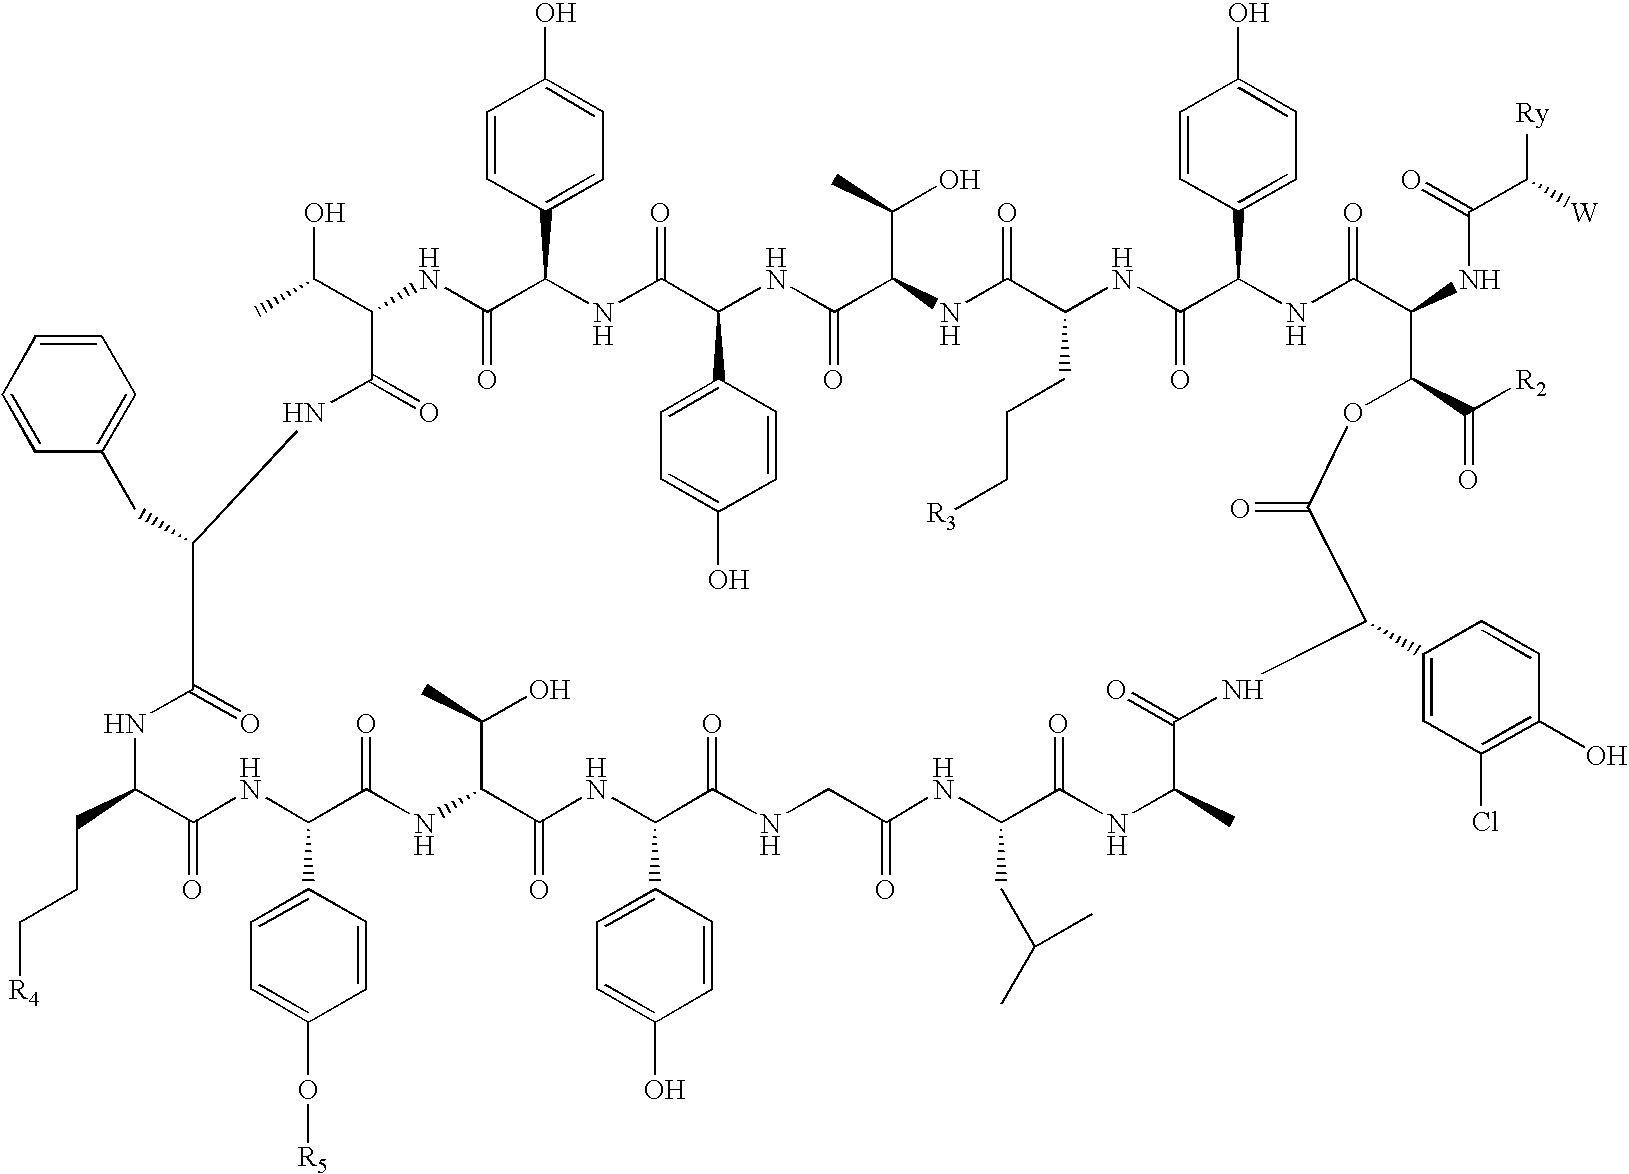 Ramoplanin derivatives possessing antibacterial activity